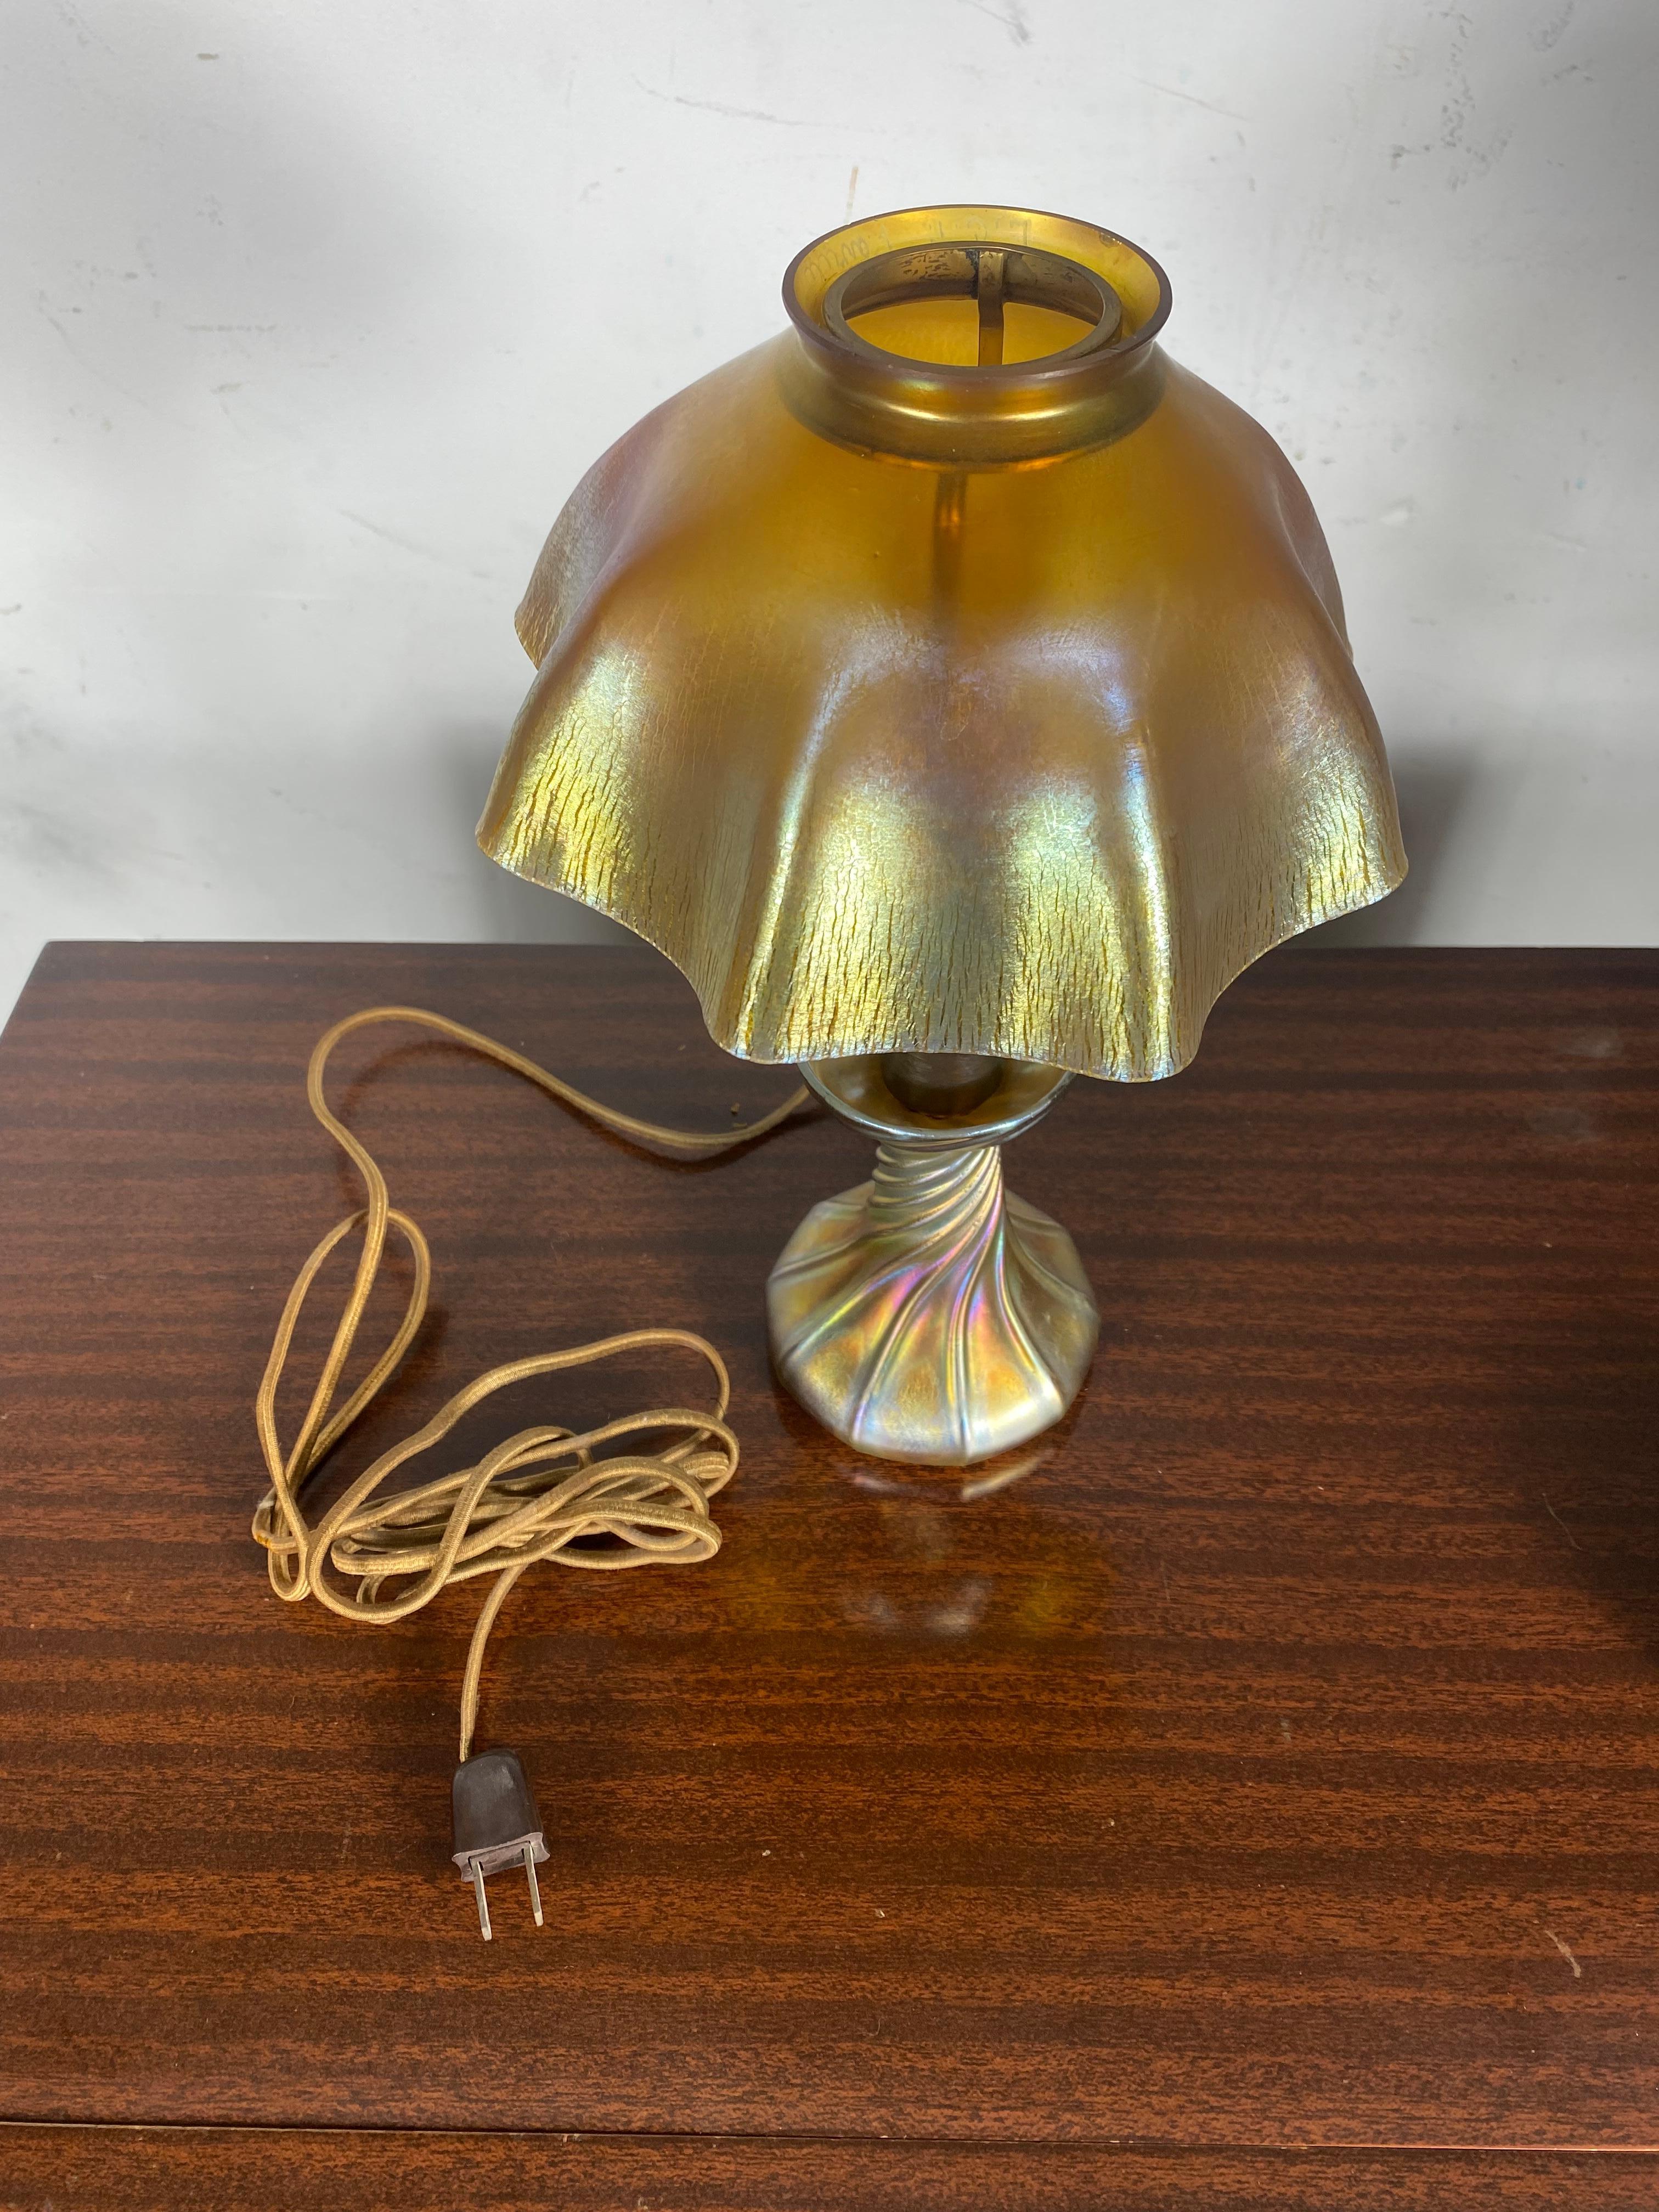 Art Glass Early 20th Century American Art Nouveau Favrile Desk Lamp by, Tiffany